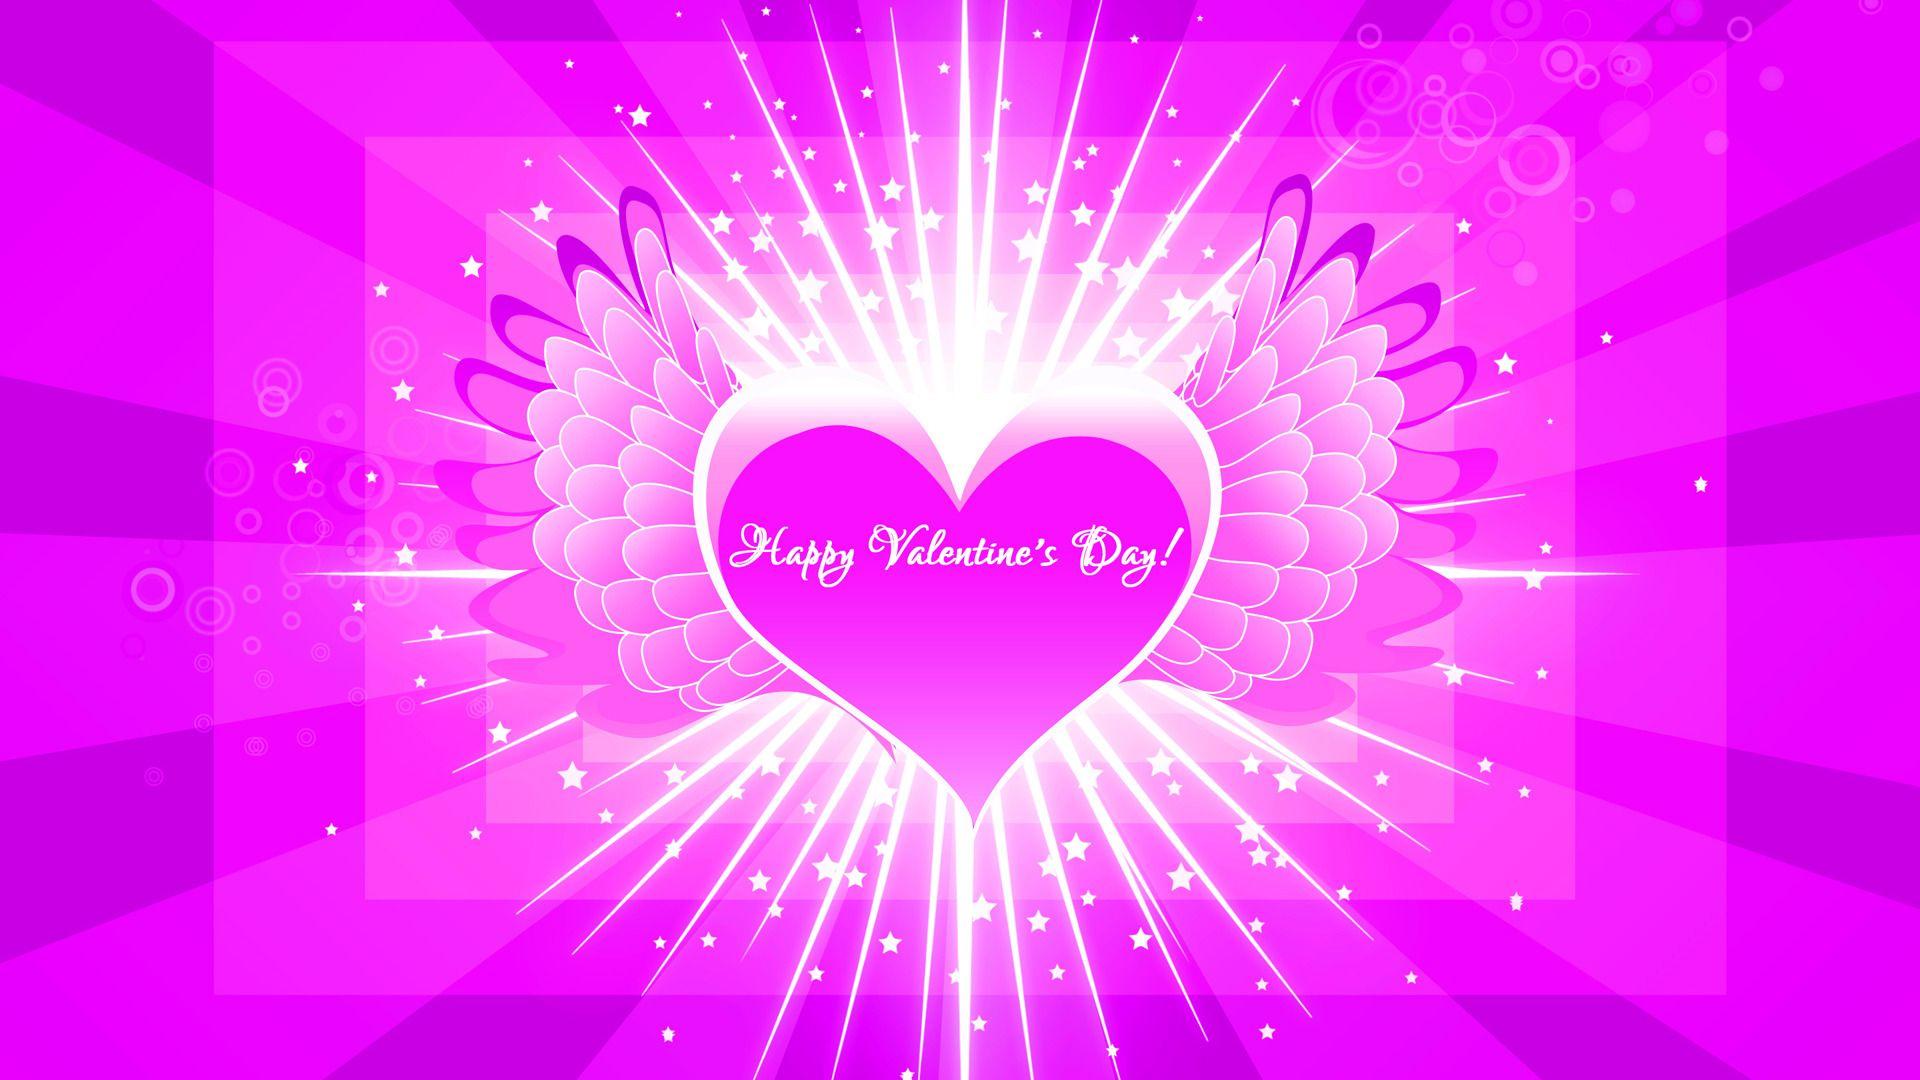 Best HD Valentine's Day Image for Mobile. PC. Desktop. Laptop